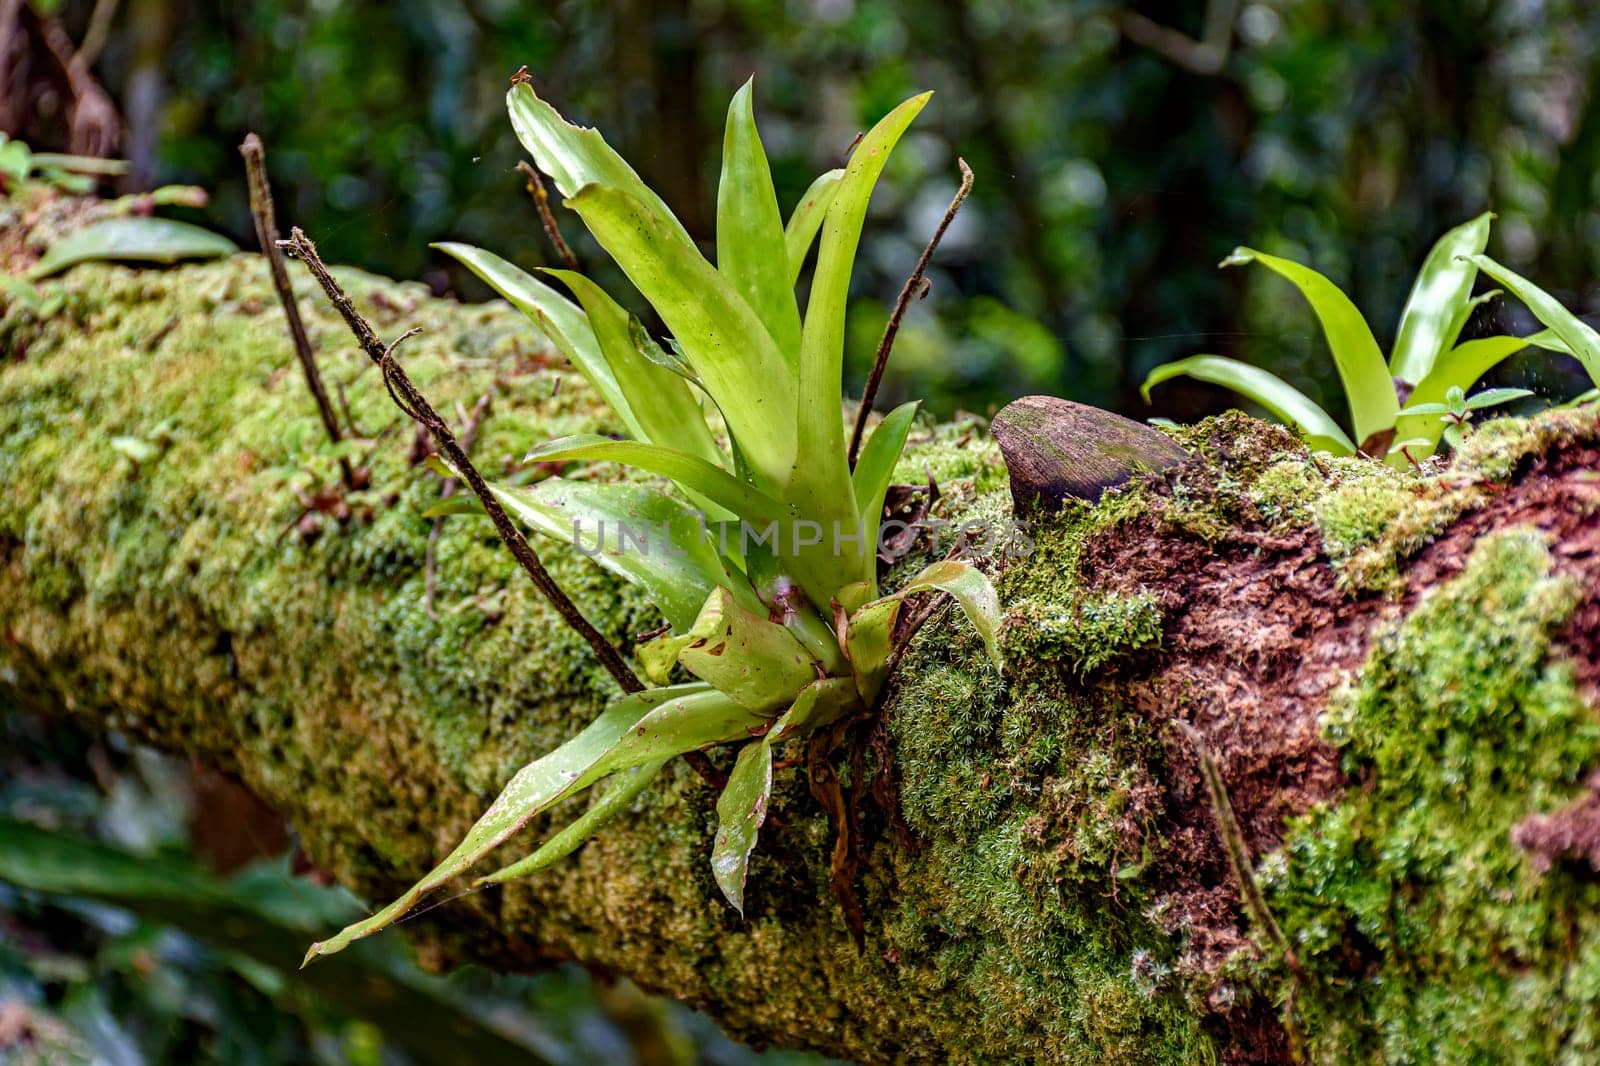 Bromeliad tree trunk from Brazilian rainforest by Fred_Pinheiro